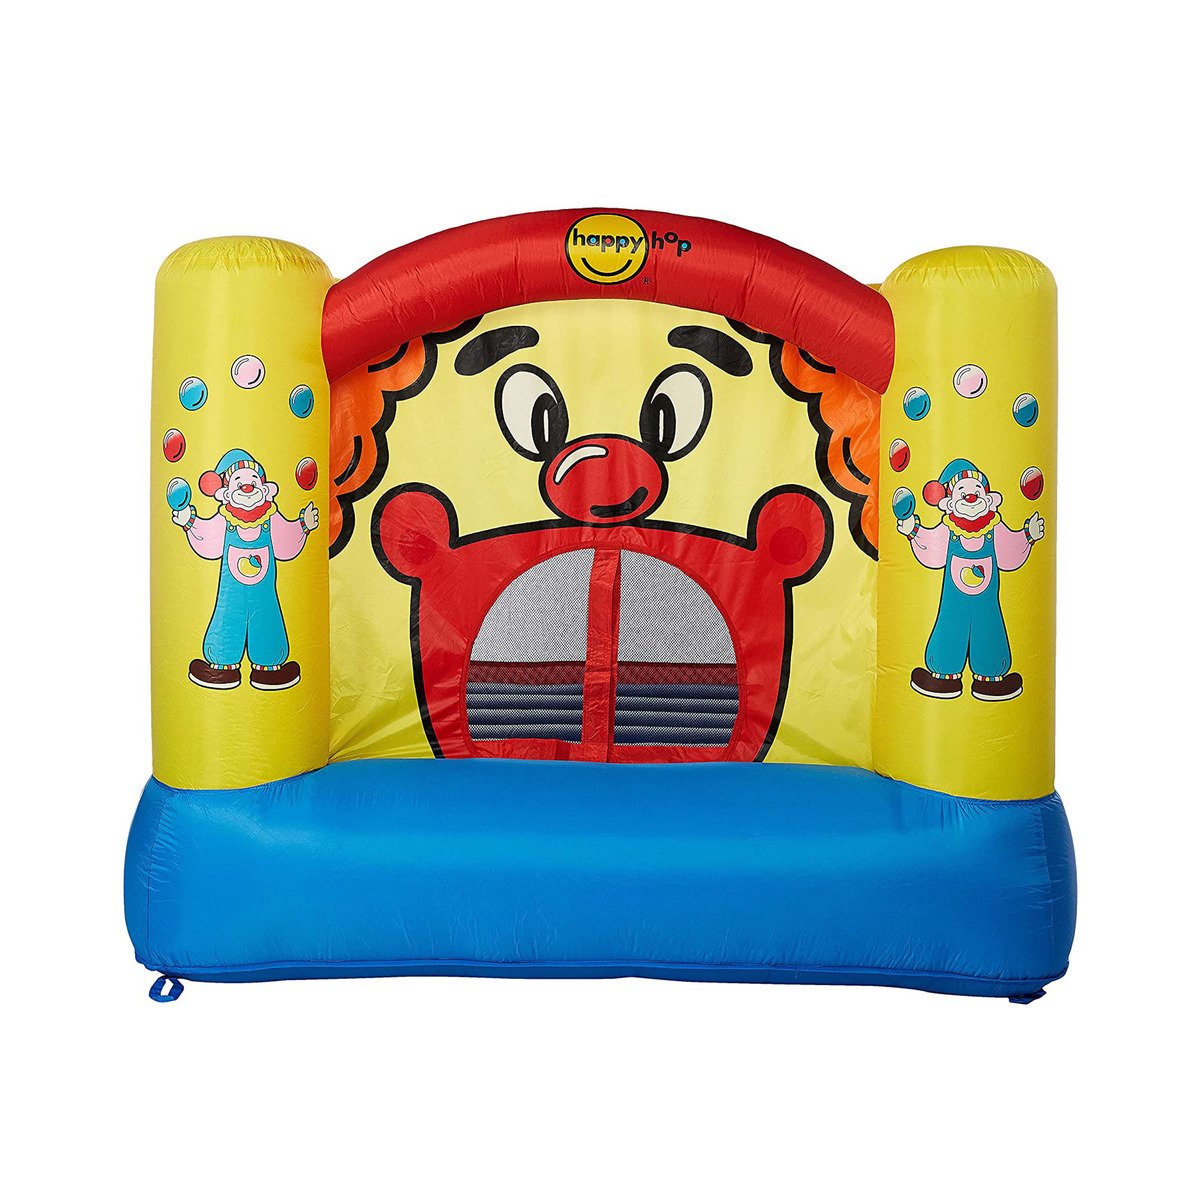 Happy Hop Clown Bouncer 9001